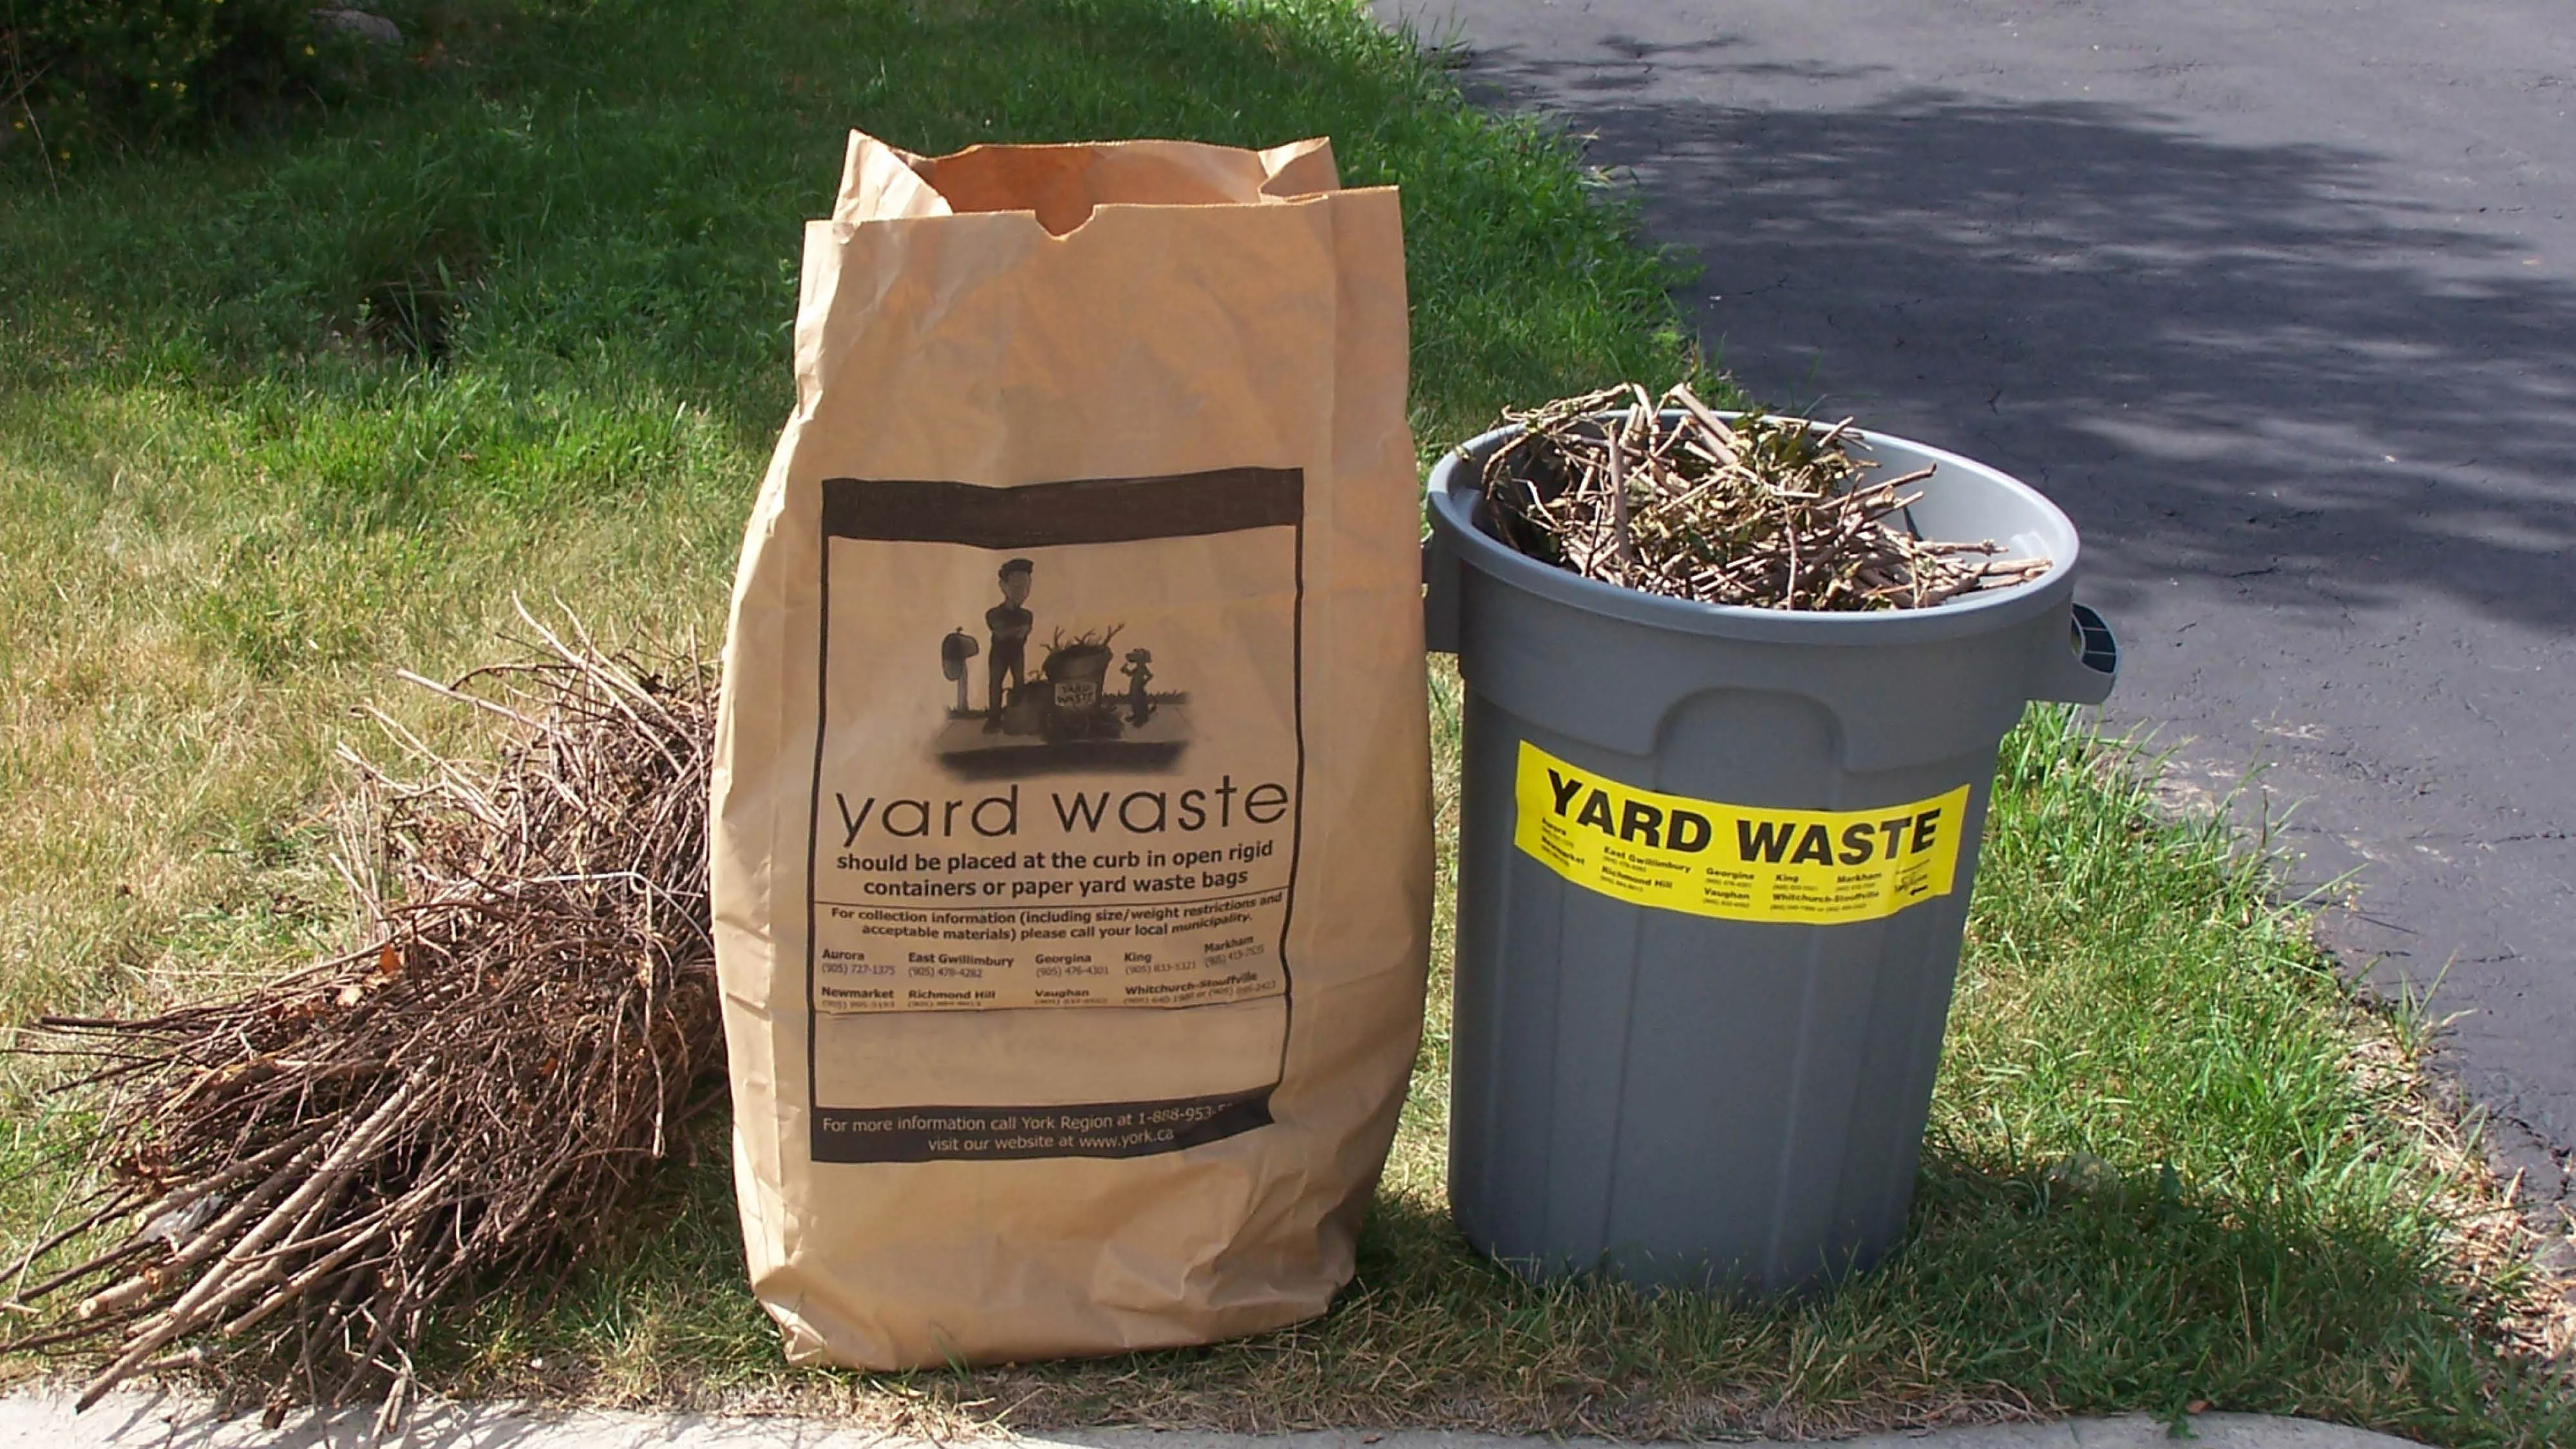 leaf and yard waste bag and bin on grass